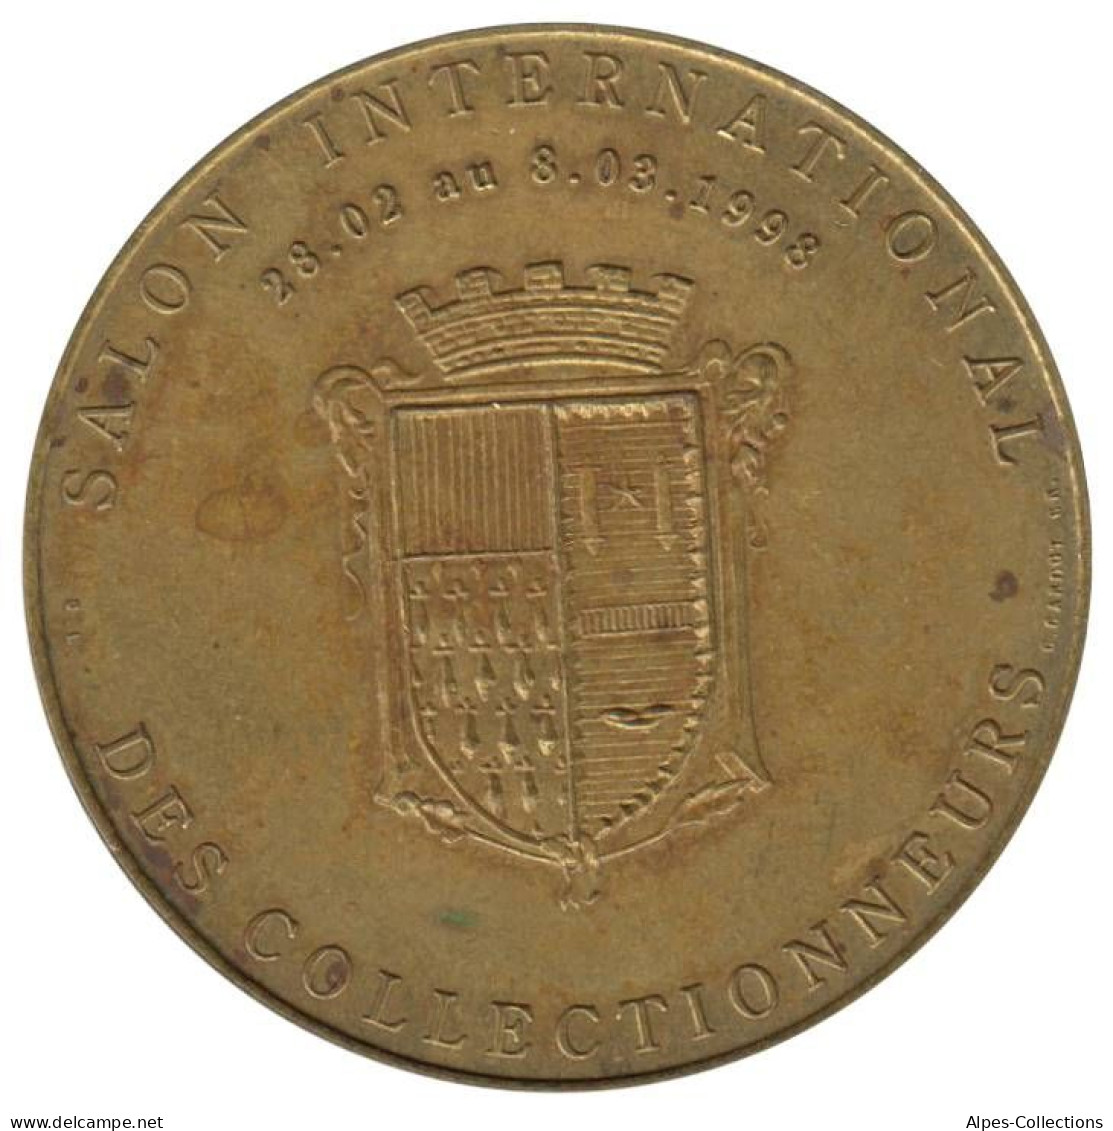 ROUBAIX - EU0010.1 - 1 EURO DES VILLES - Réf: NR - 1998 - Euro Van De Steden